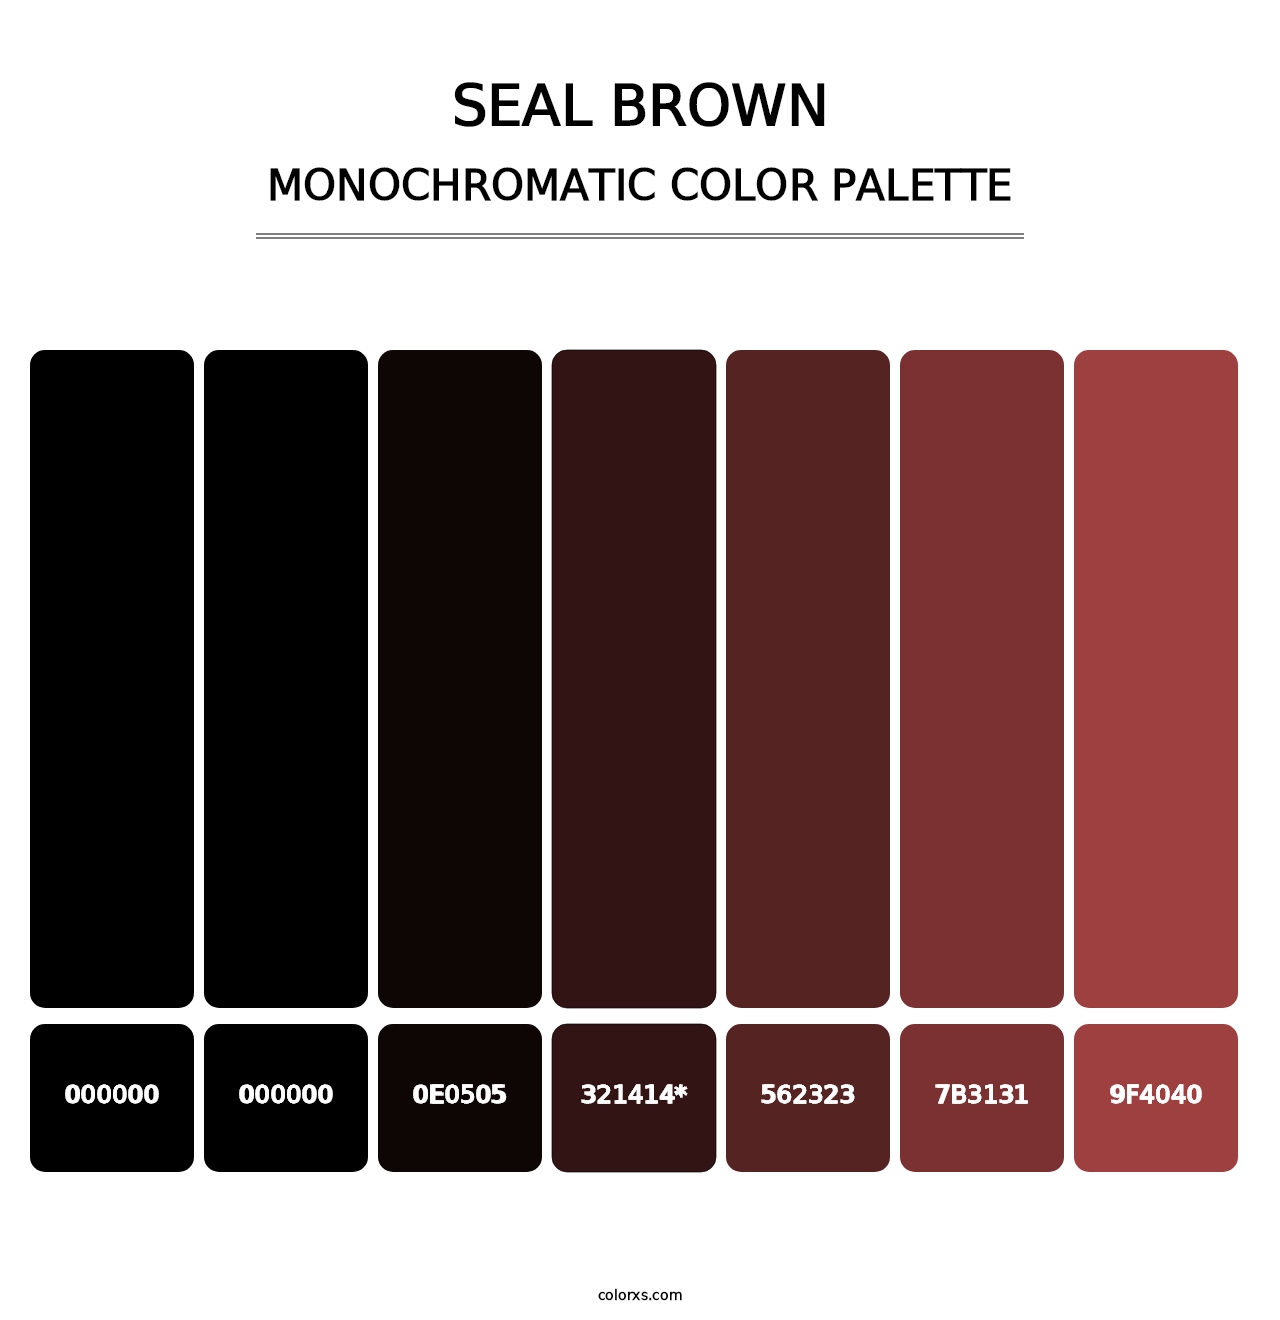 Seal brown - Monochromatic Color Palette